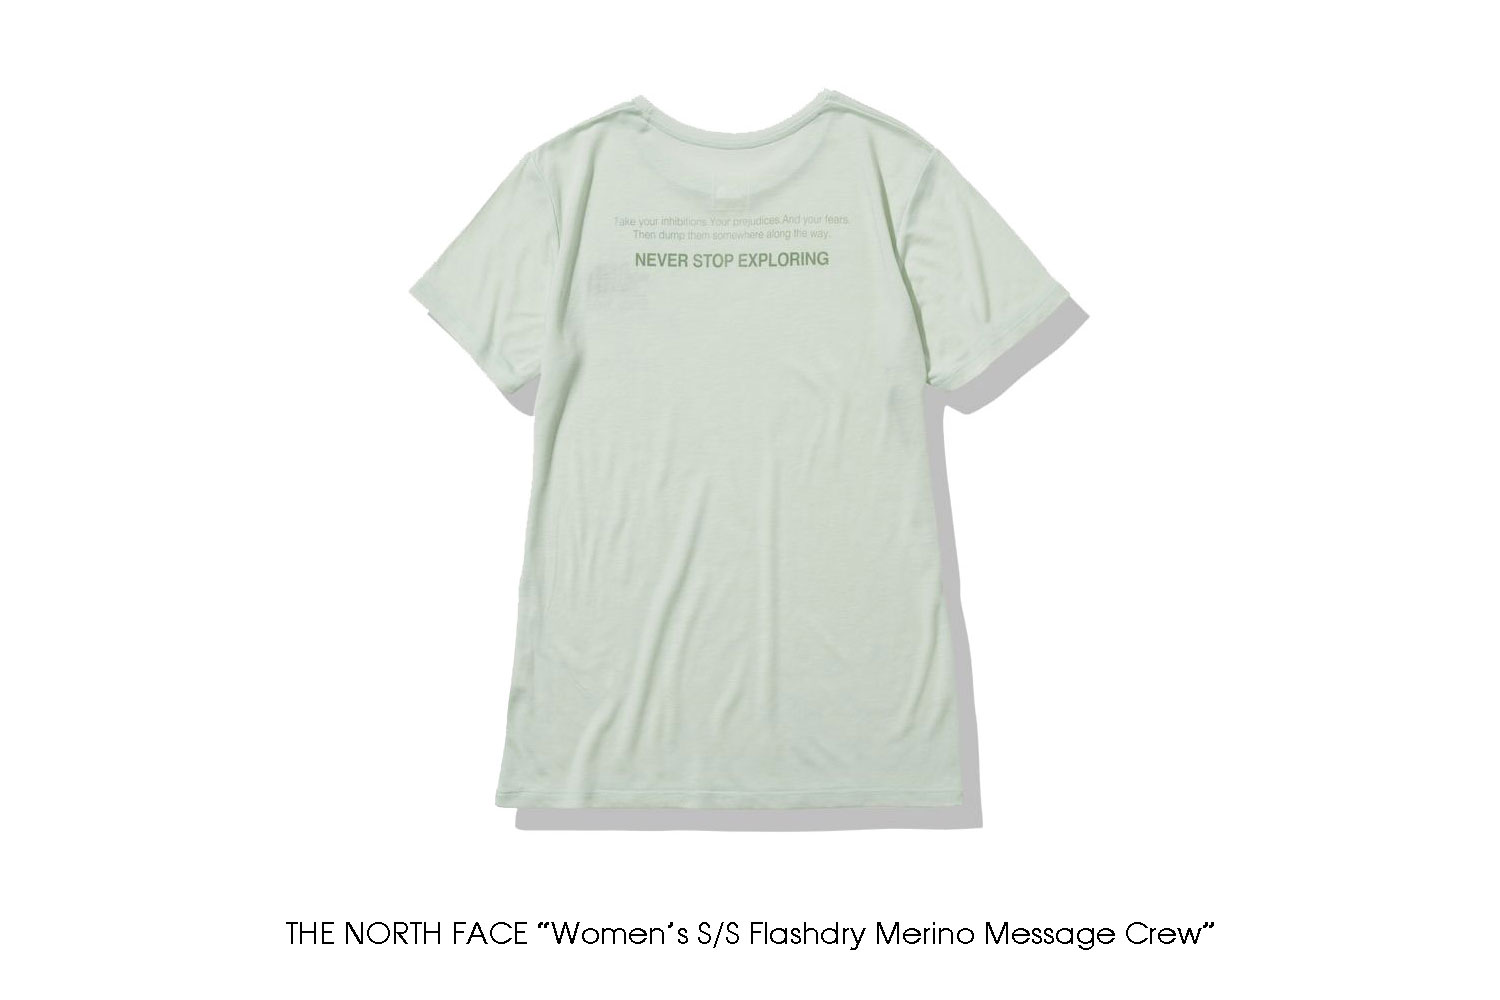 THE NORTH FACE "Women's S/S Flashdry Merino Message Crew"